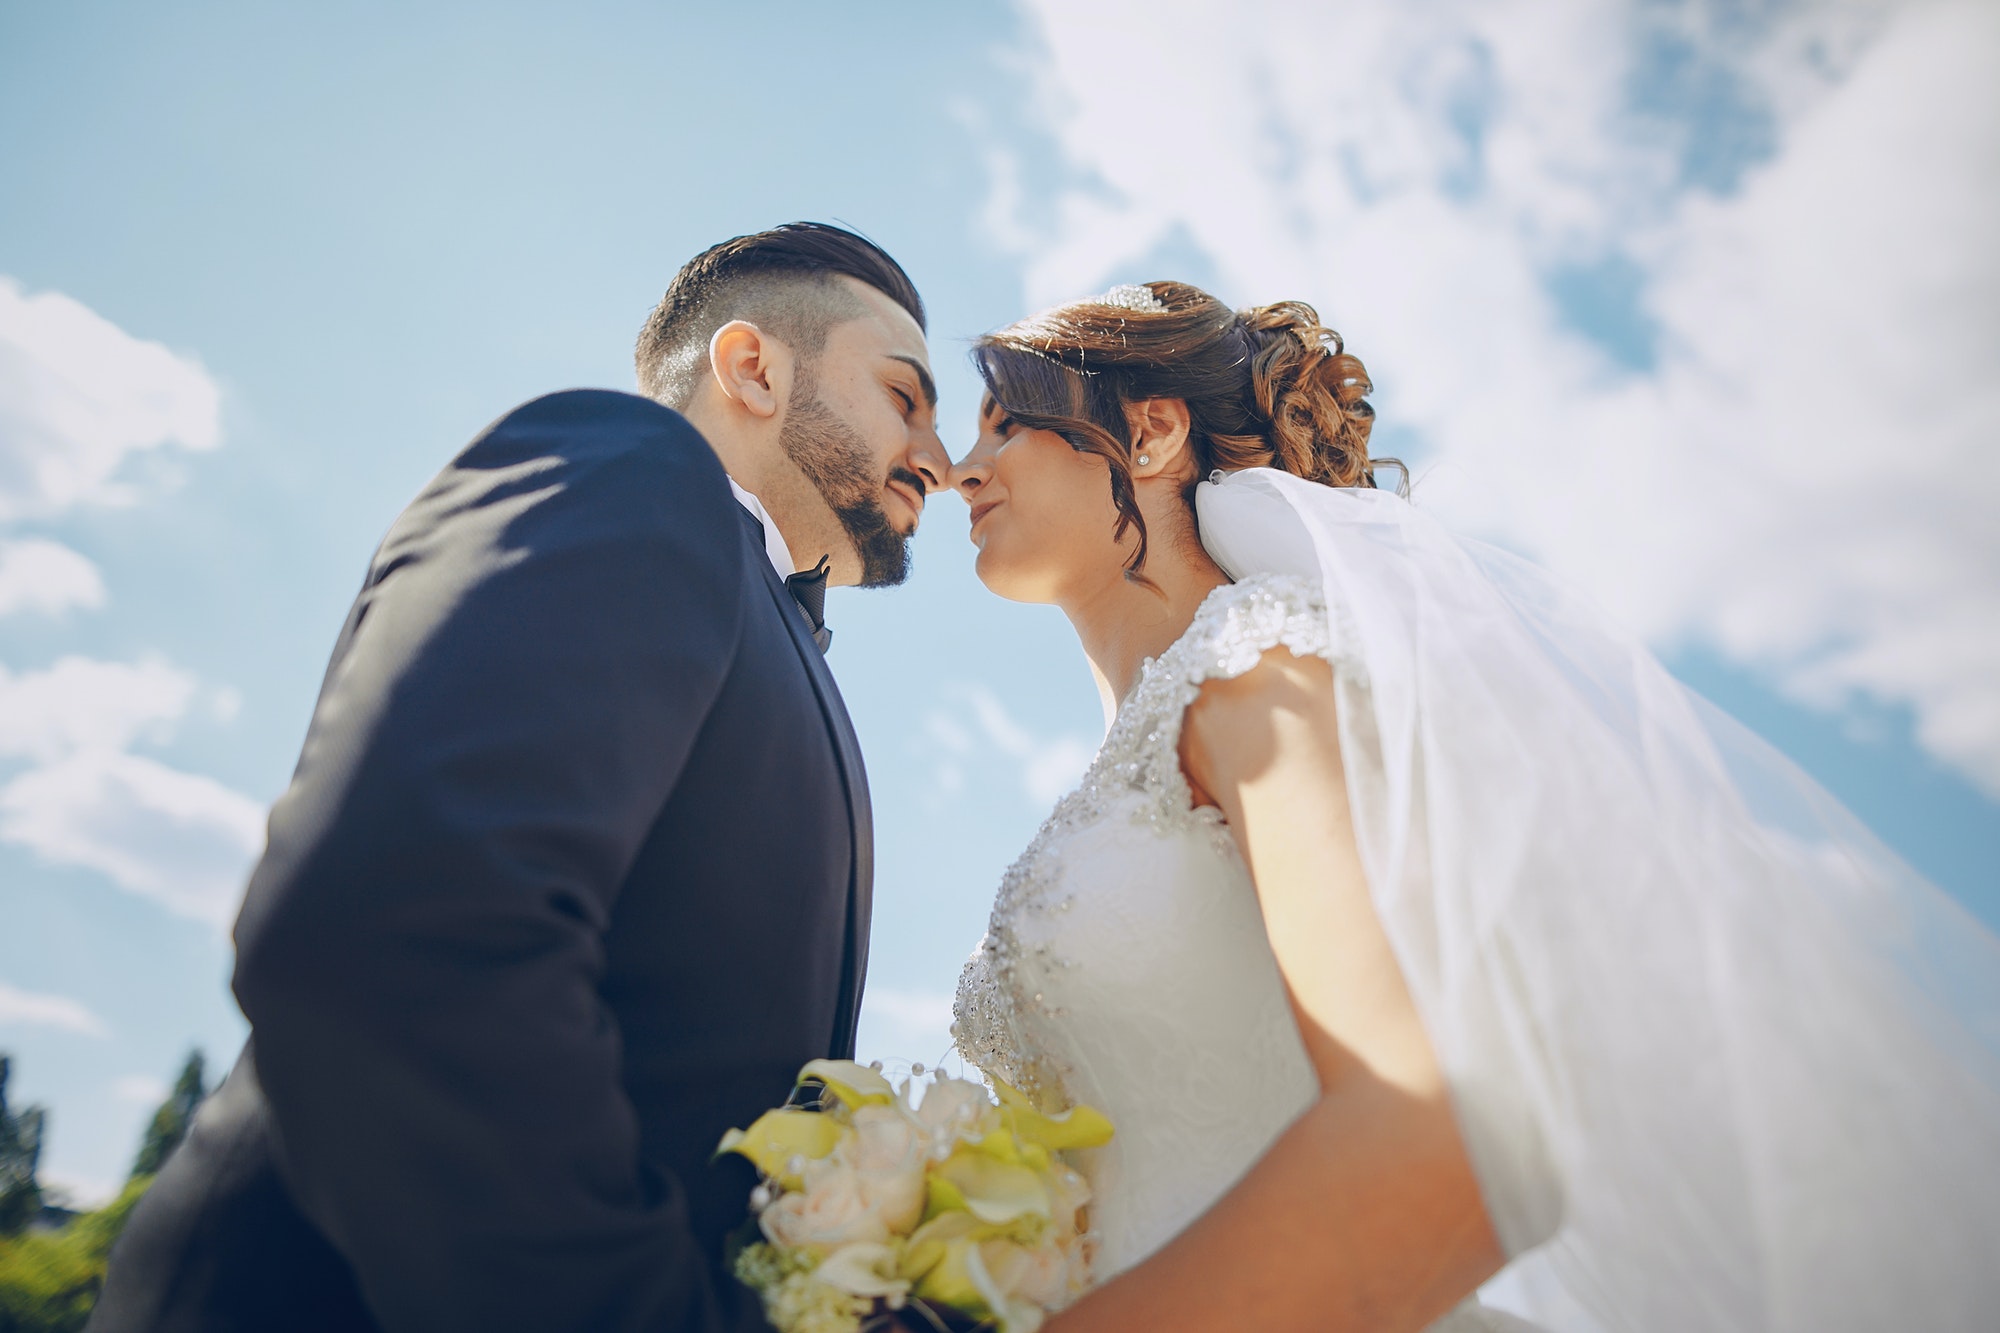 turkish-wedding-3.jpg